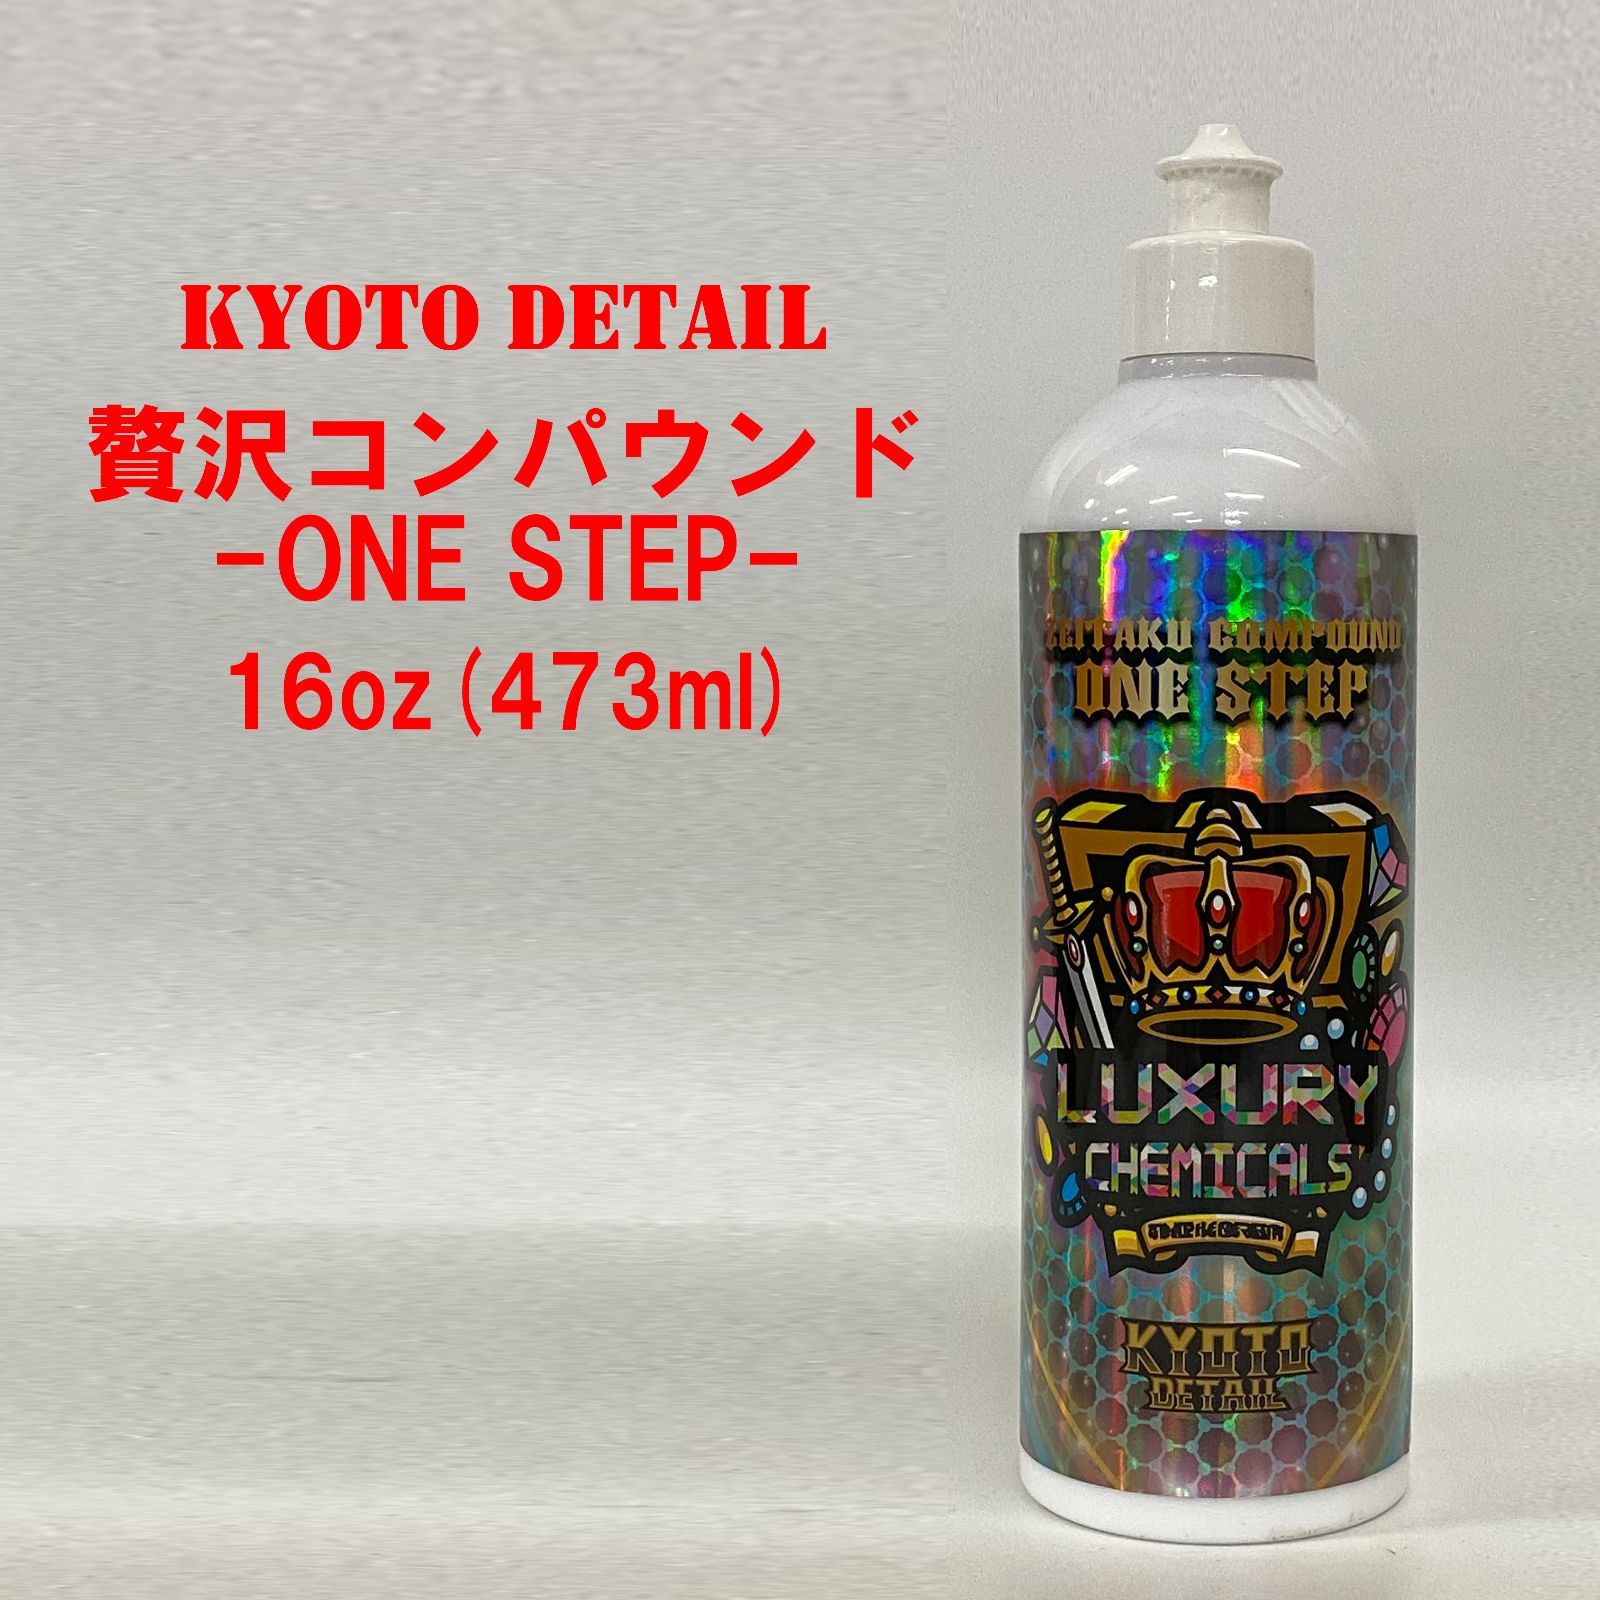 KYOTO DETIL 『贅沢コンパウンド ONE STEP 』16oz - メンテナンス用品